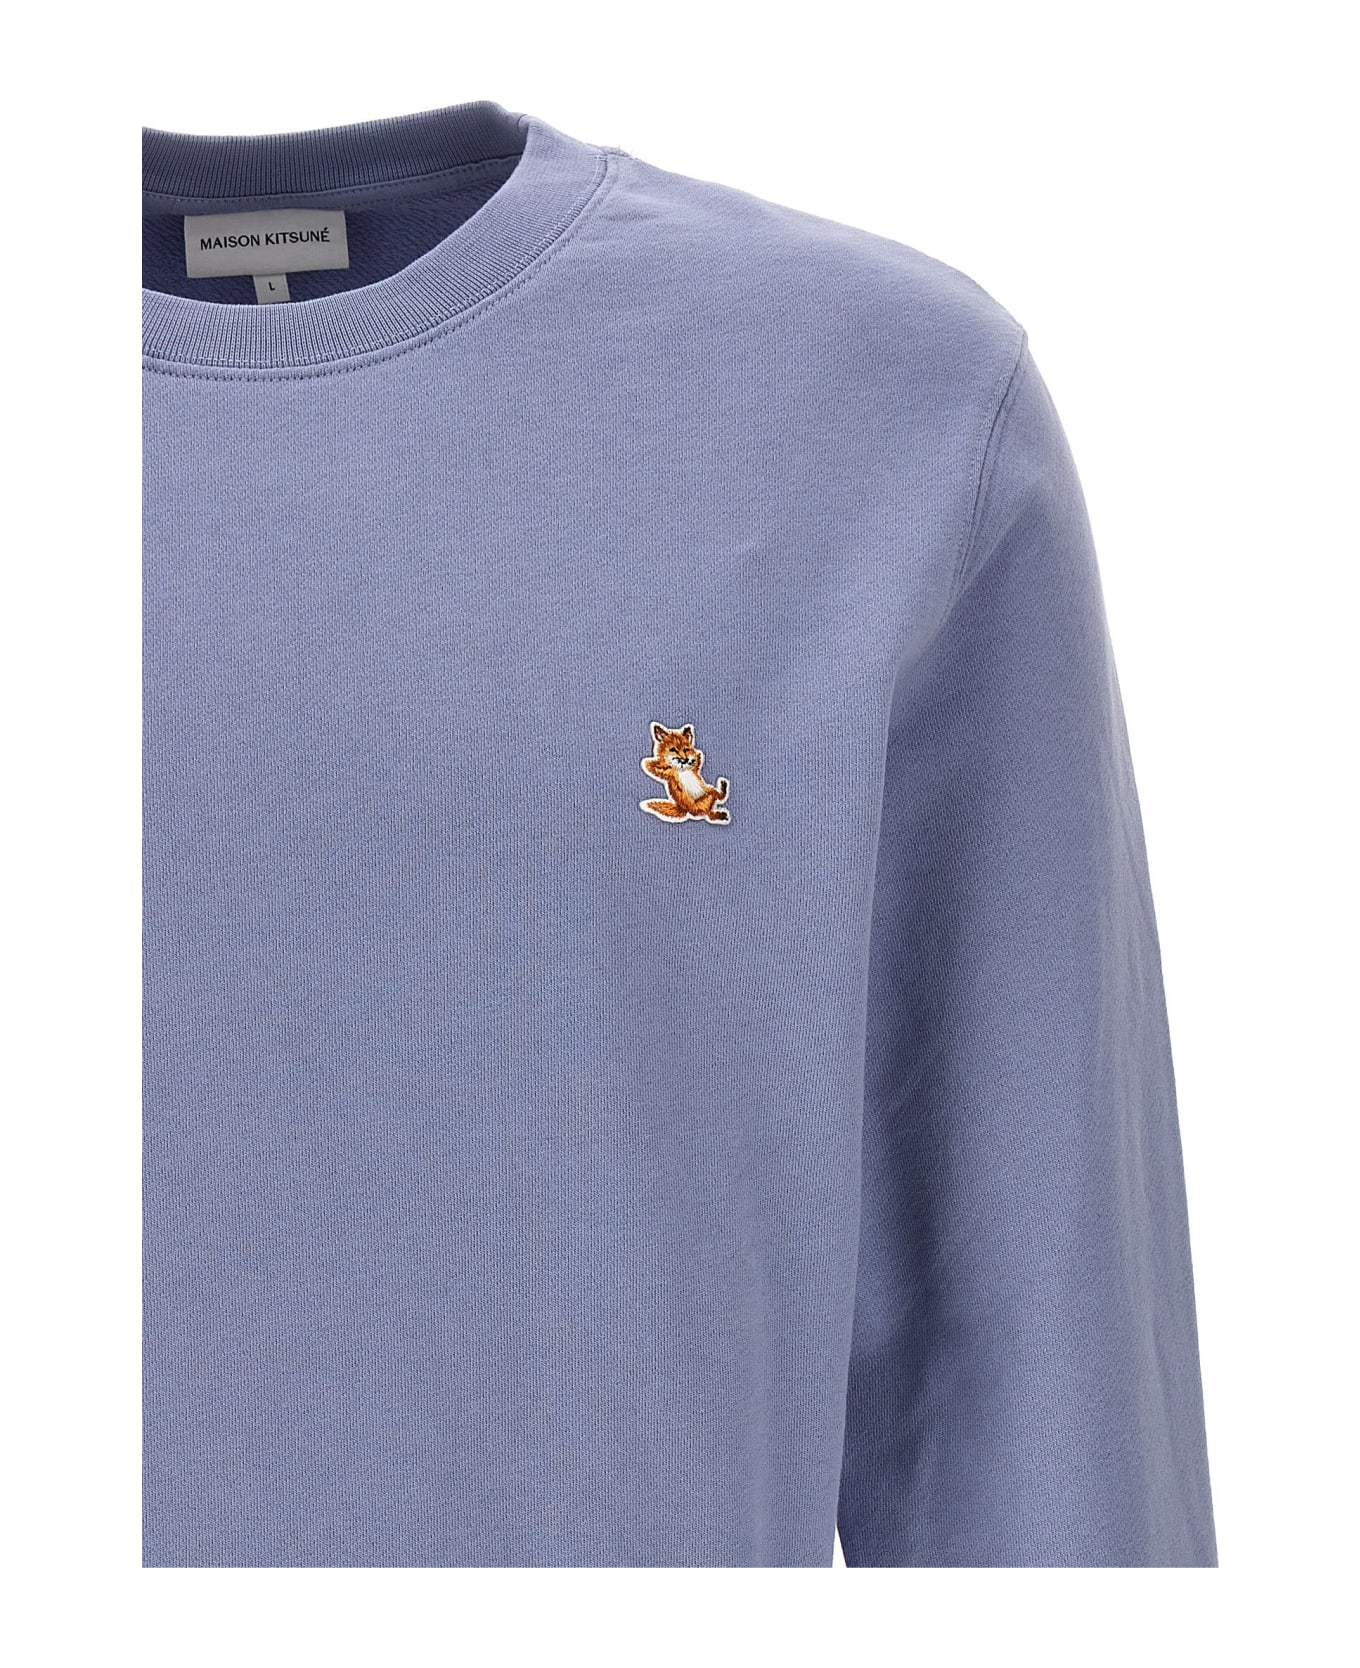 Maison Kitsuné 'chillax Fox' Sweatshirt - Blue